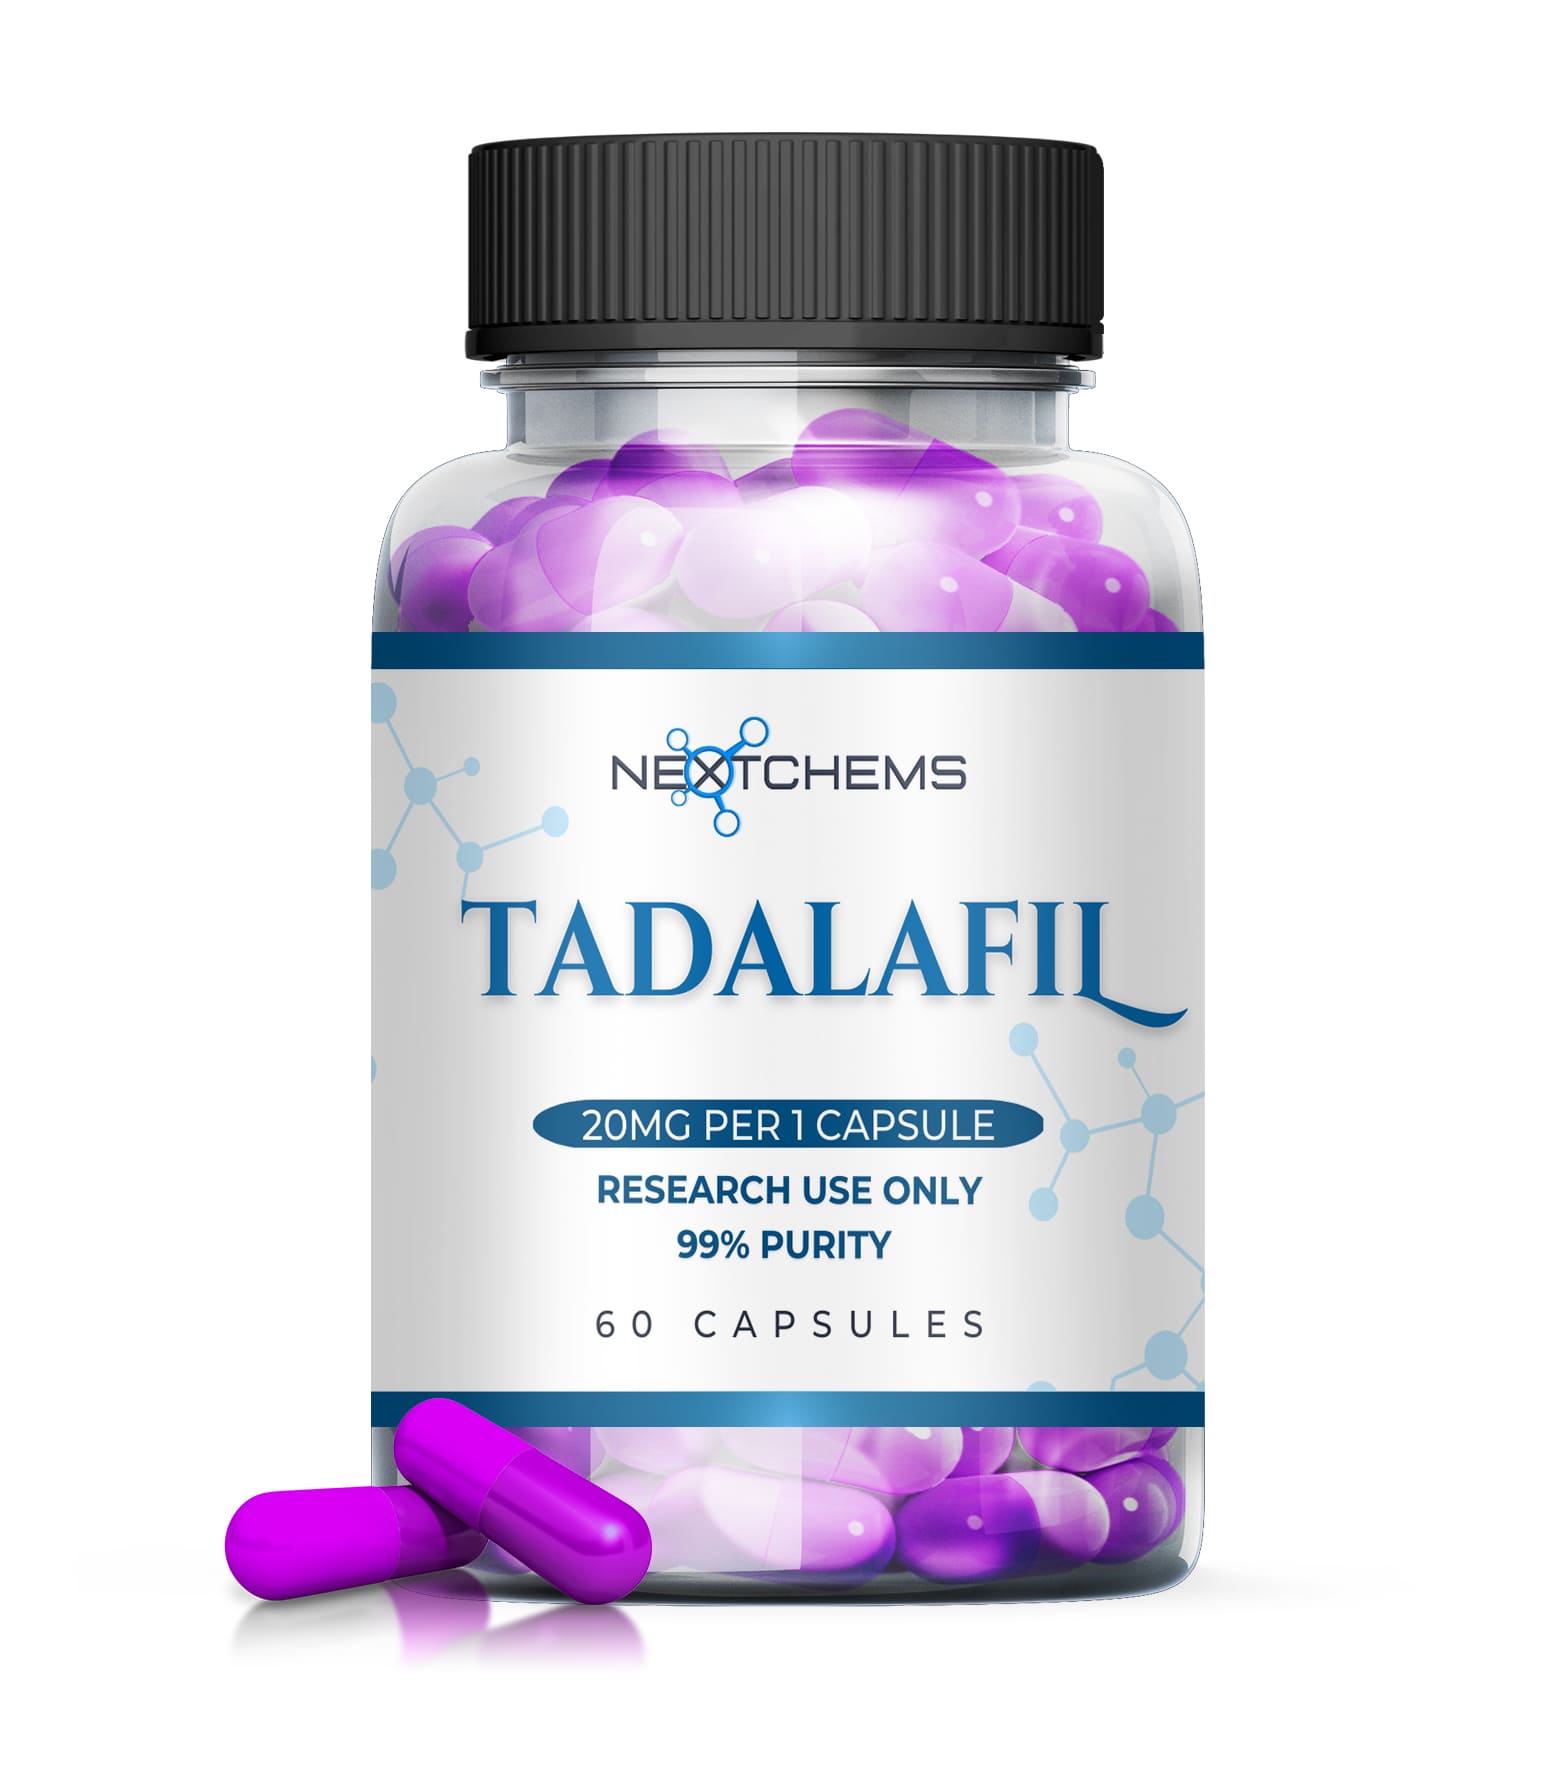 Next Chems Tadalafil product image